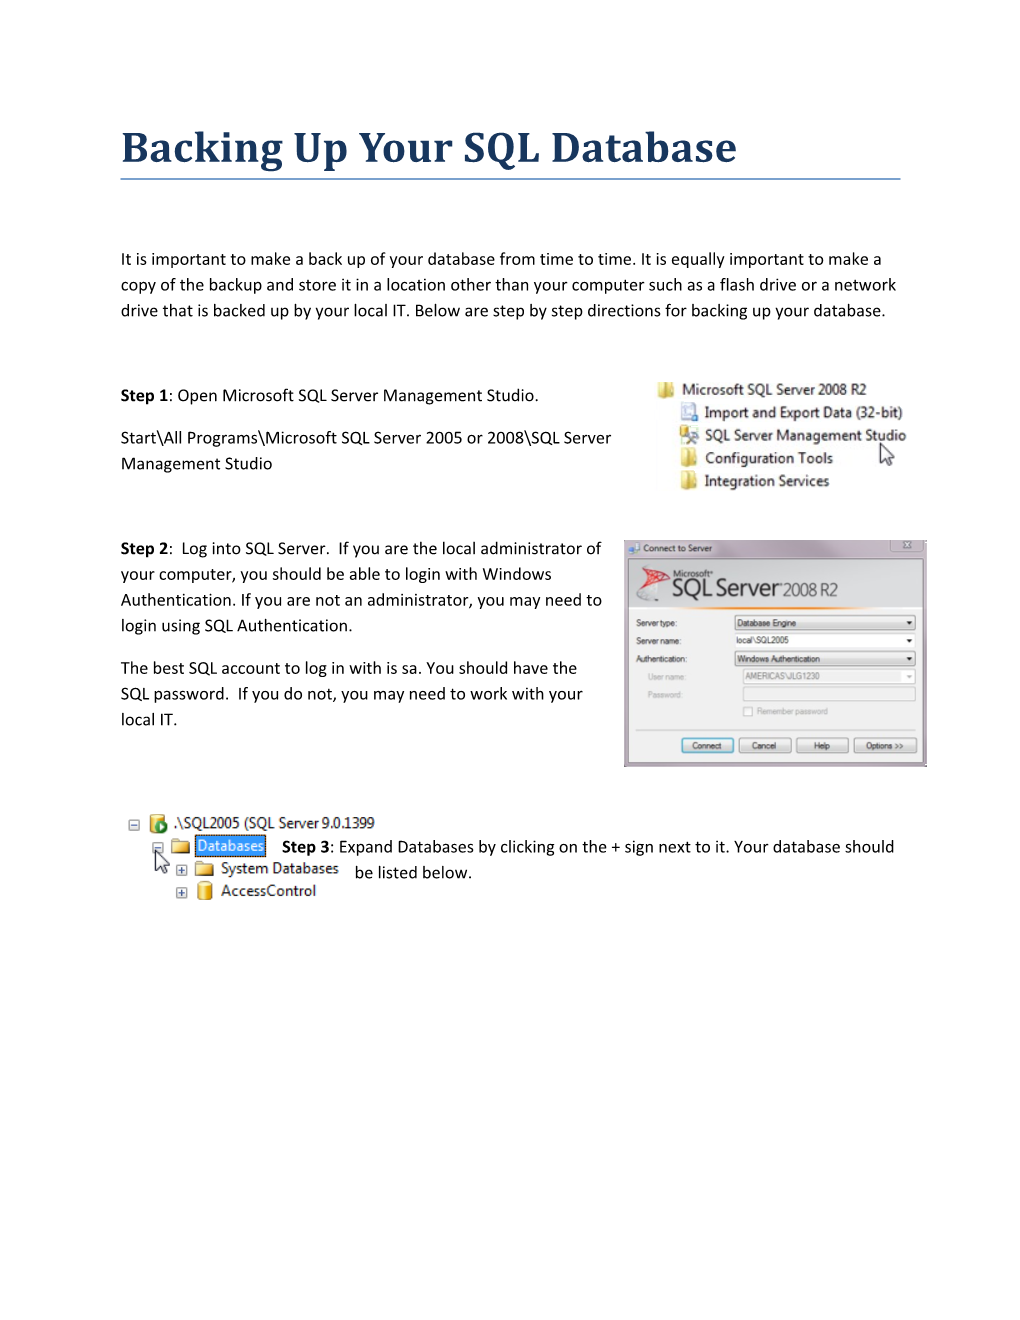 Backing up Your SQL Database